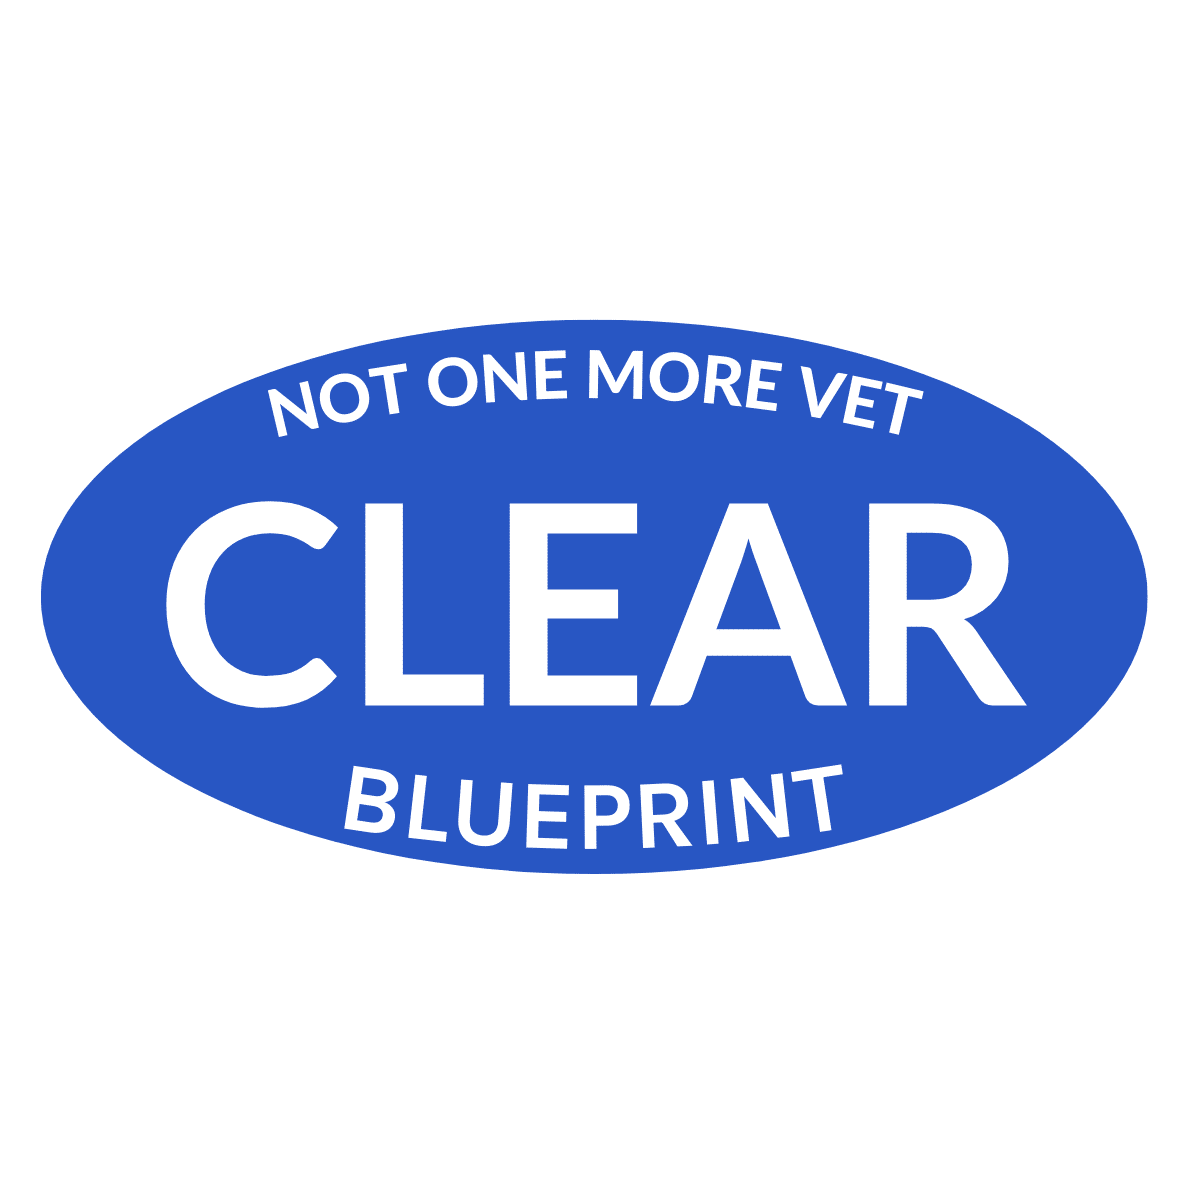 CLEAR Blueprint  Not One More Vet